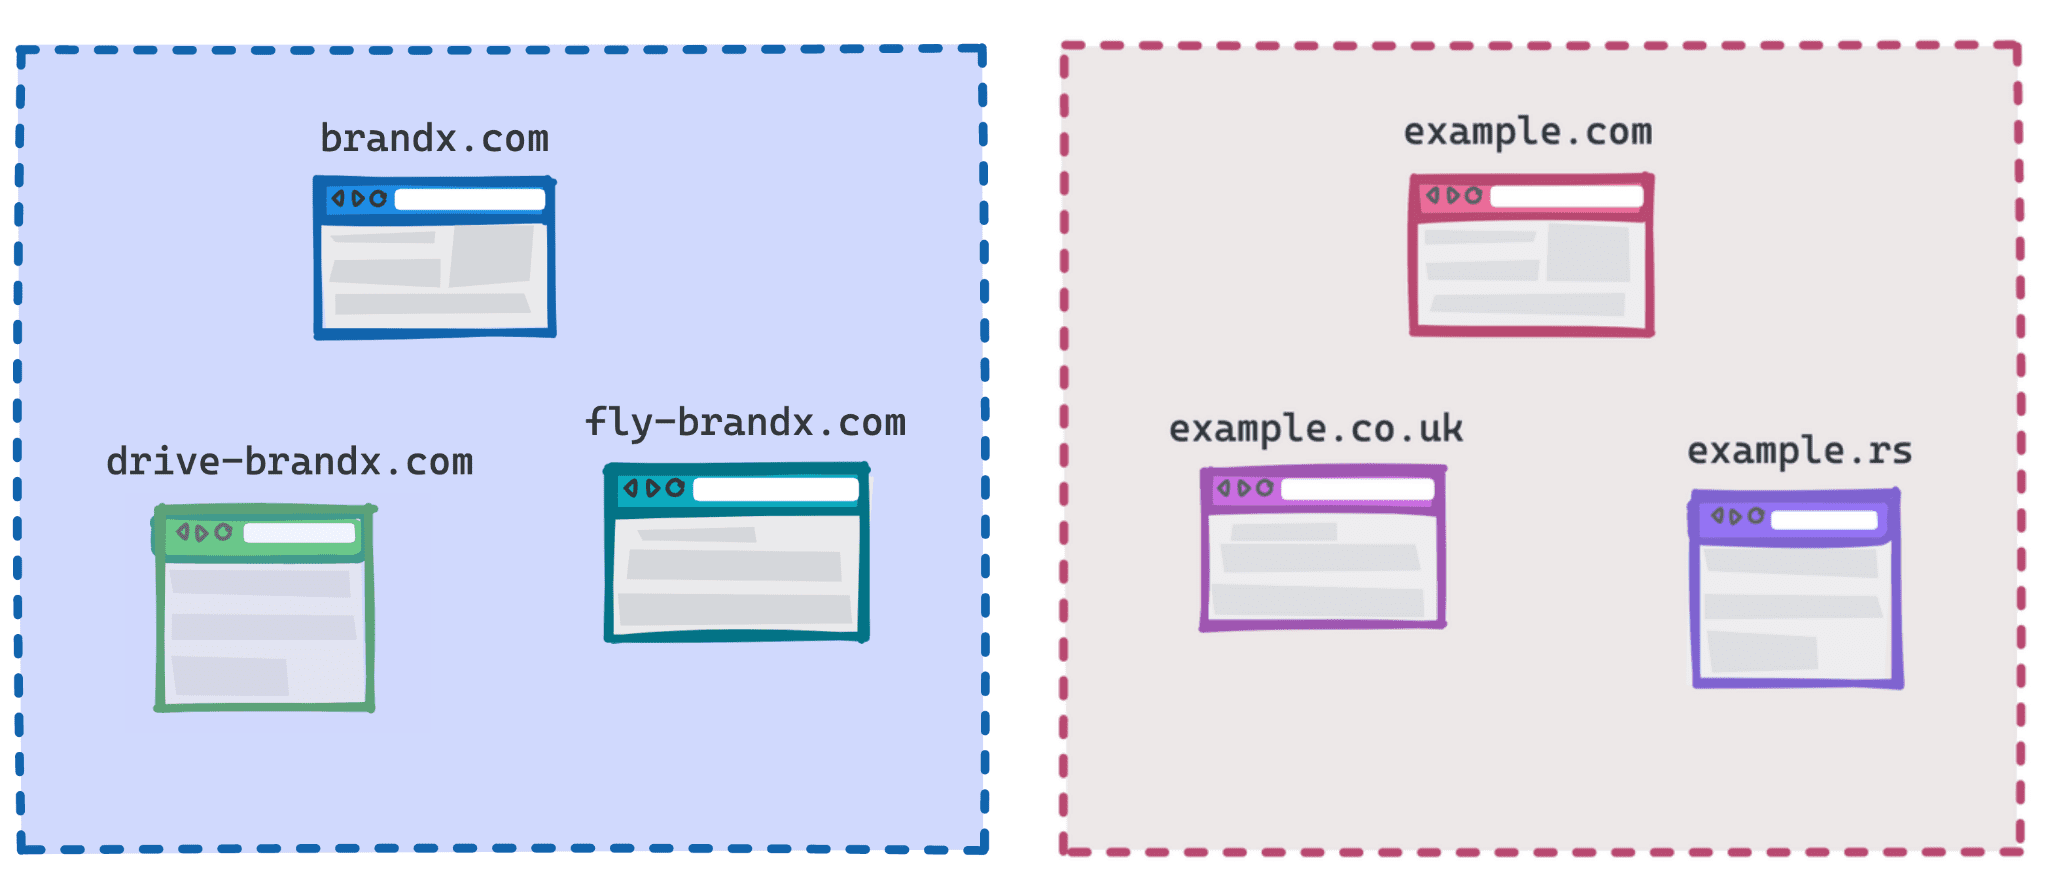 brandx.com, fly-brandx.com, drive-brandx.com을 하나의 그룹으로, example.com, example.rs, example.co.uk를 또 다른 그룹으로 보여주는 다이어그램